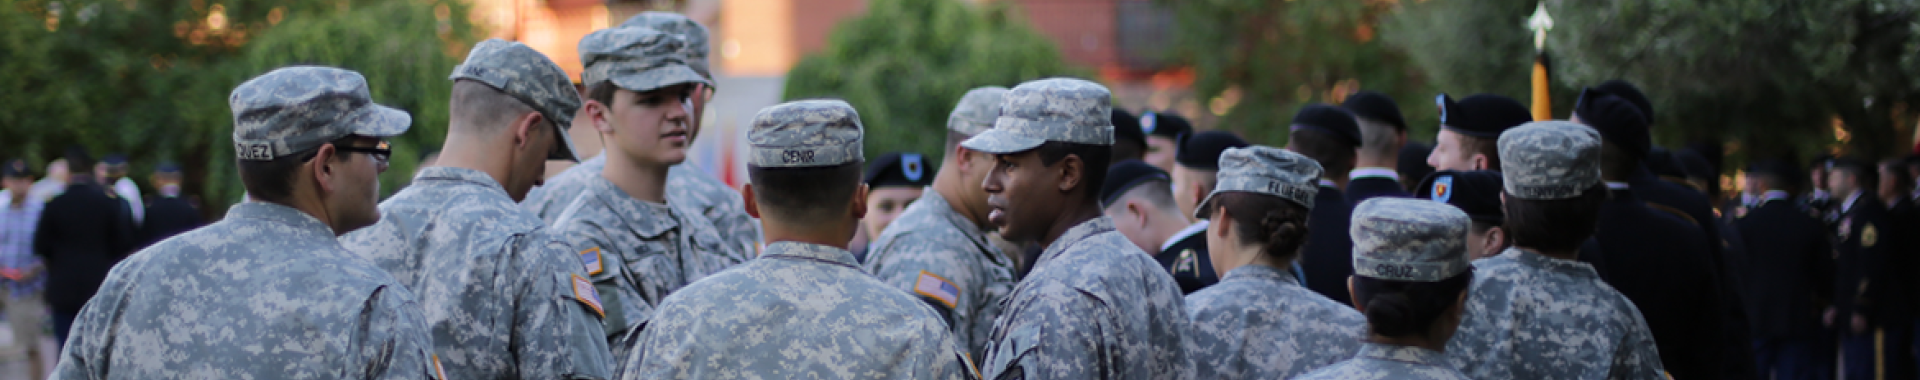 Members of Army ROTC talking.